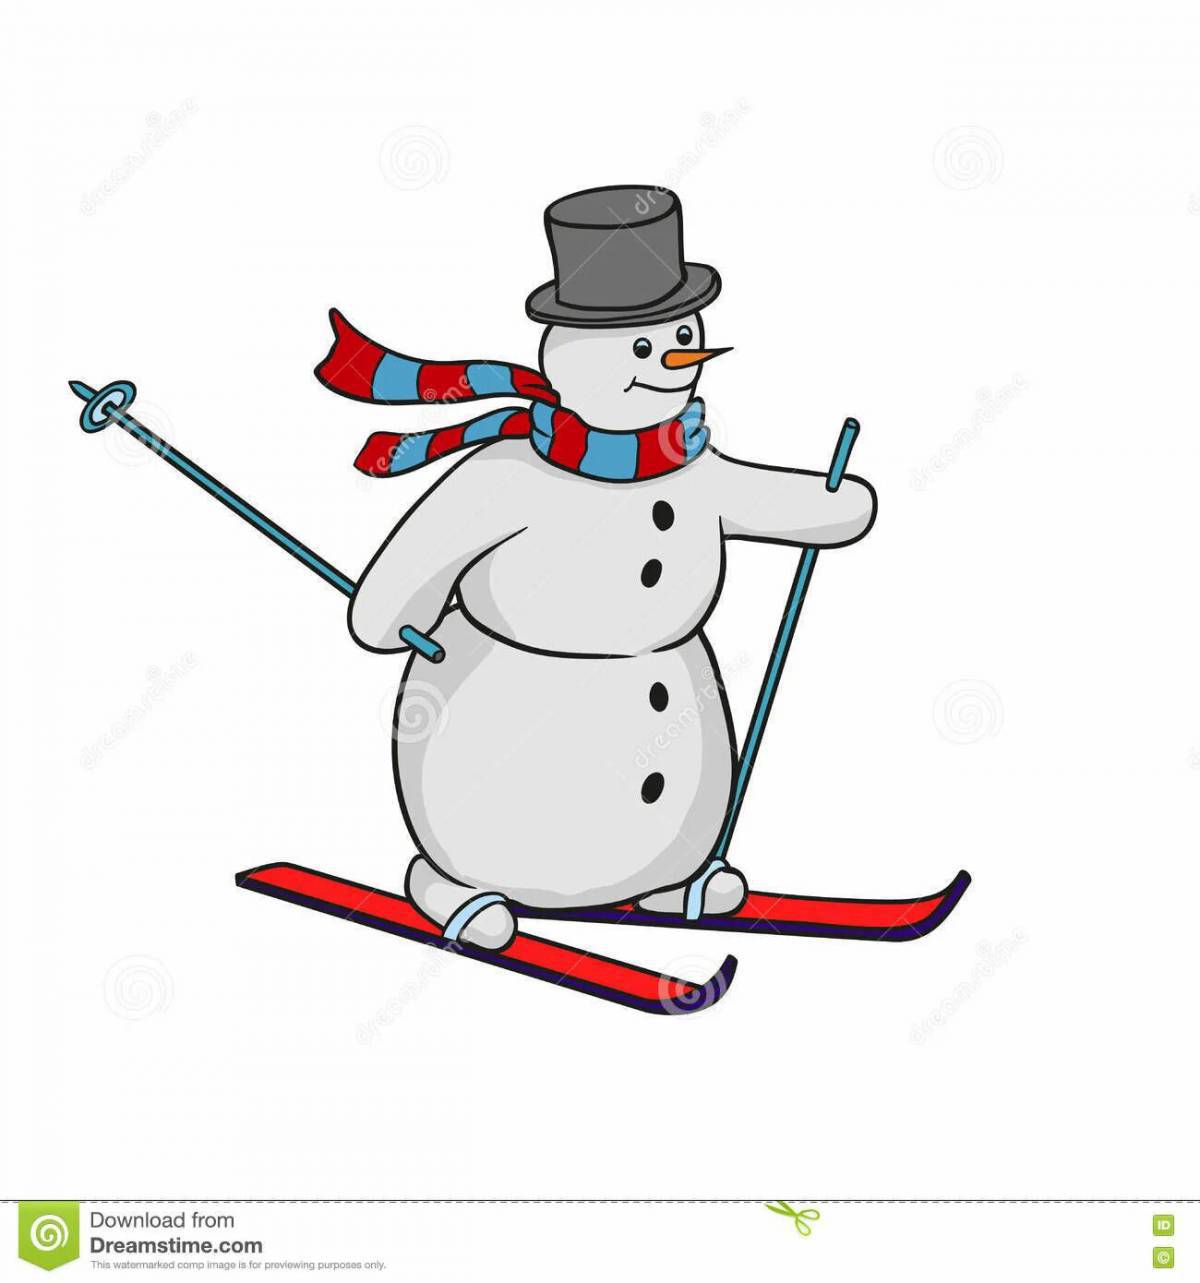 Снеговик на лыжах #32